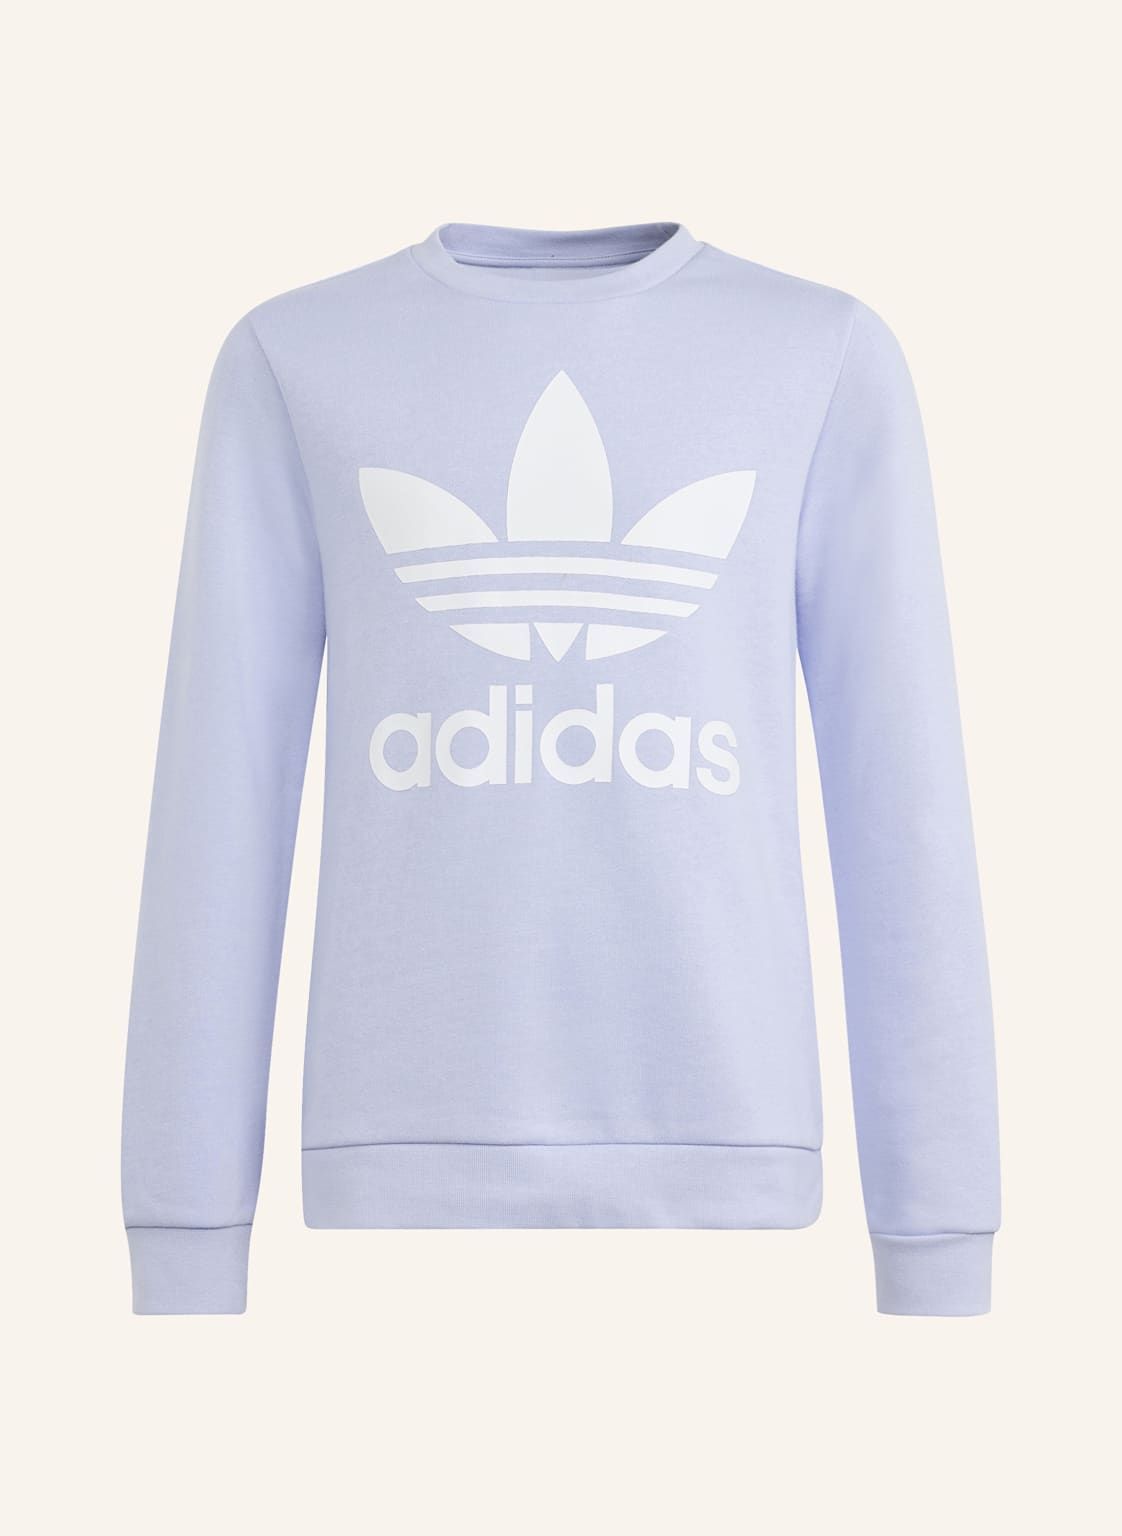 Adidas Originals Sweatshirt Trefoil lila von adidas Originals